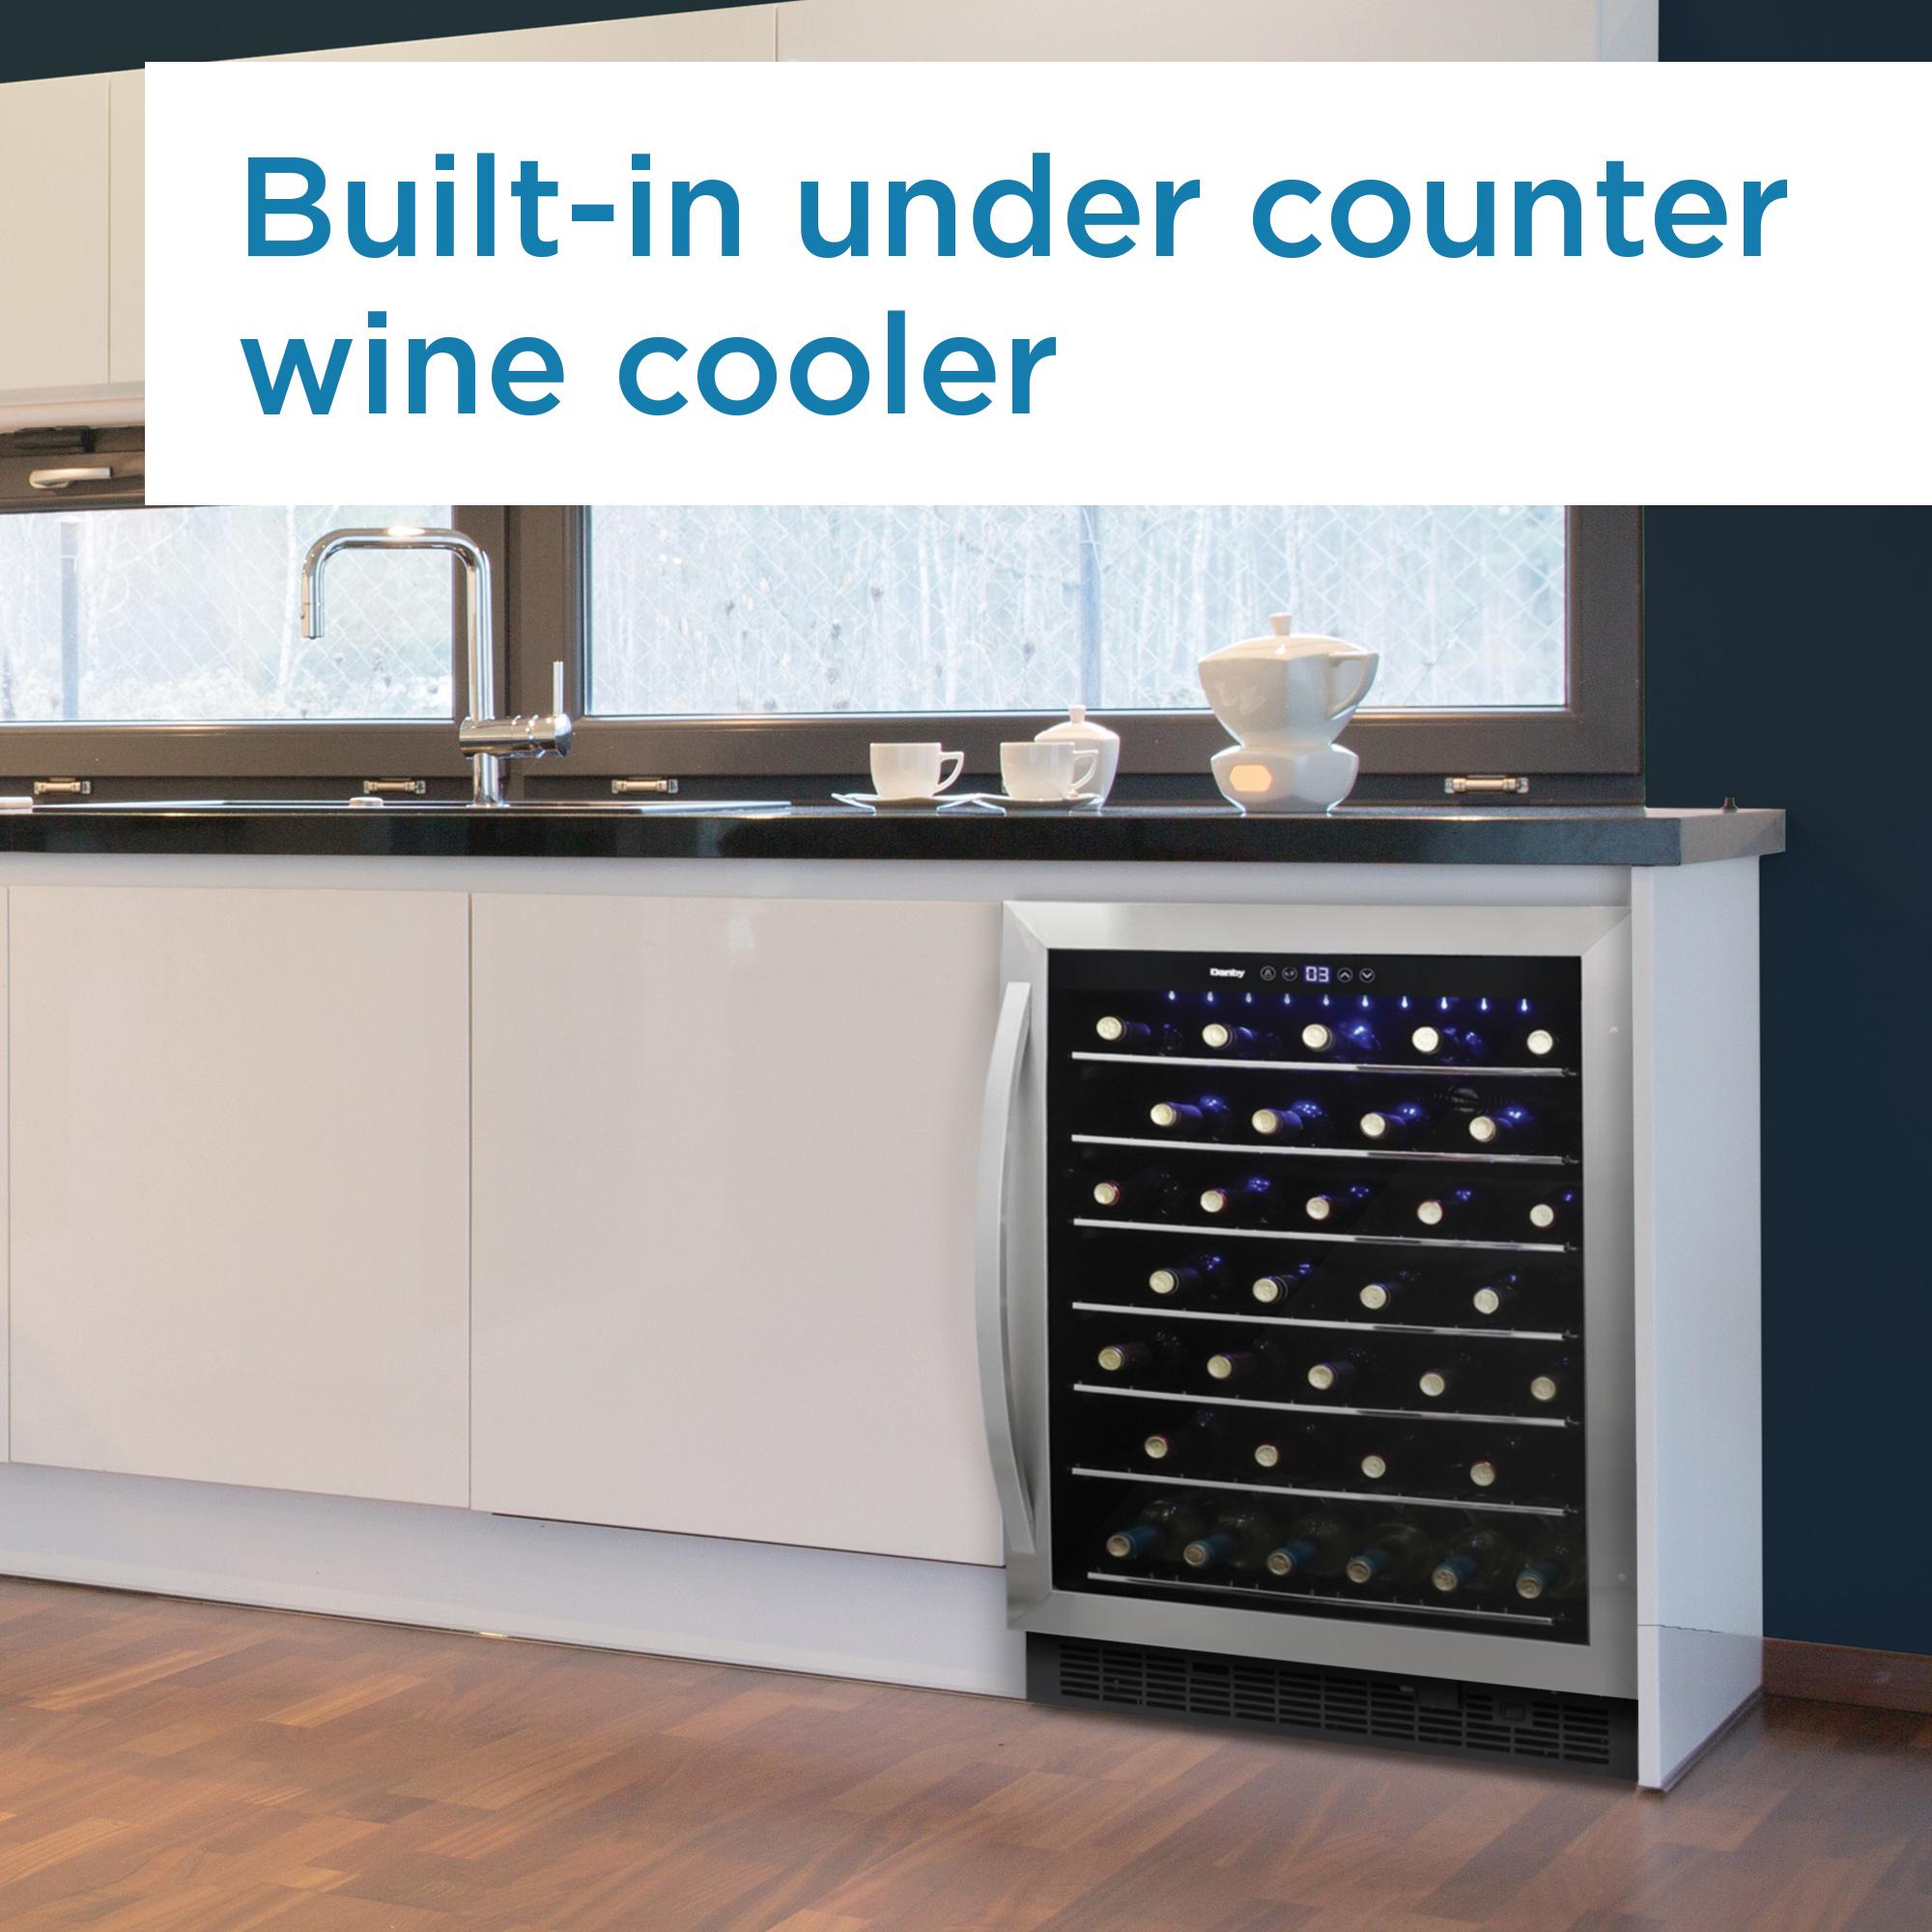 Danby 60 Bottle Built-in Wine Cooler in Stainless Steel